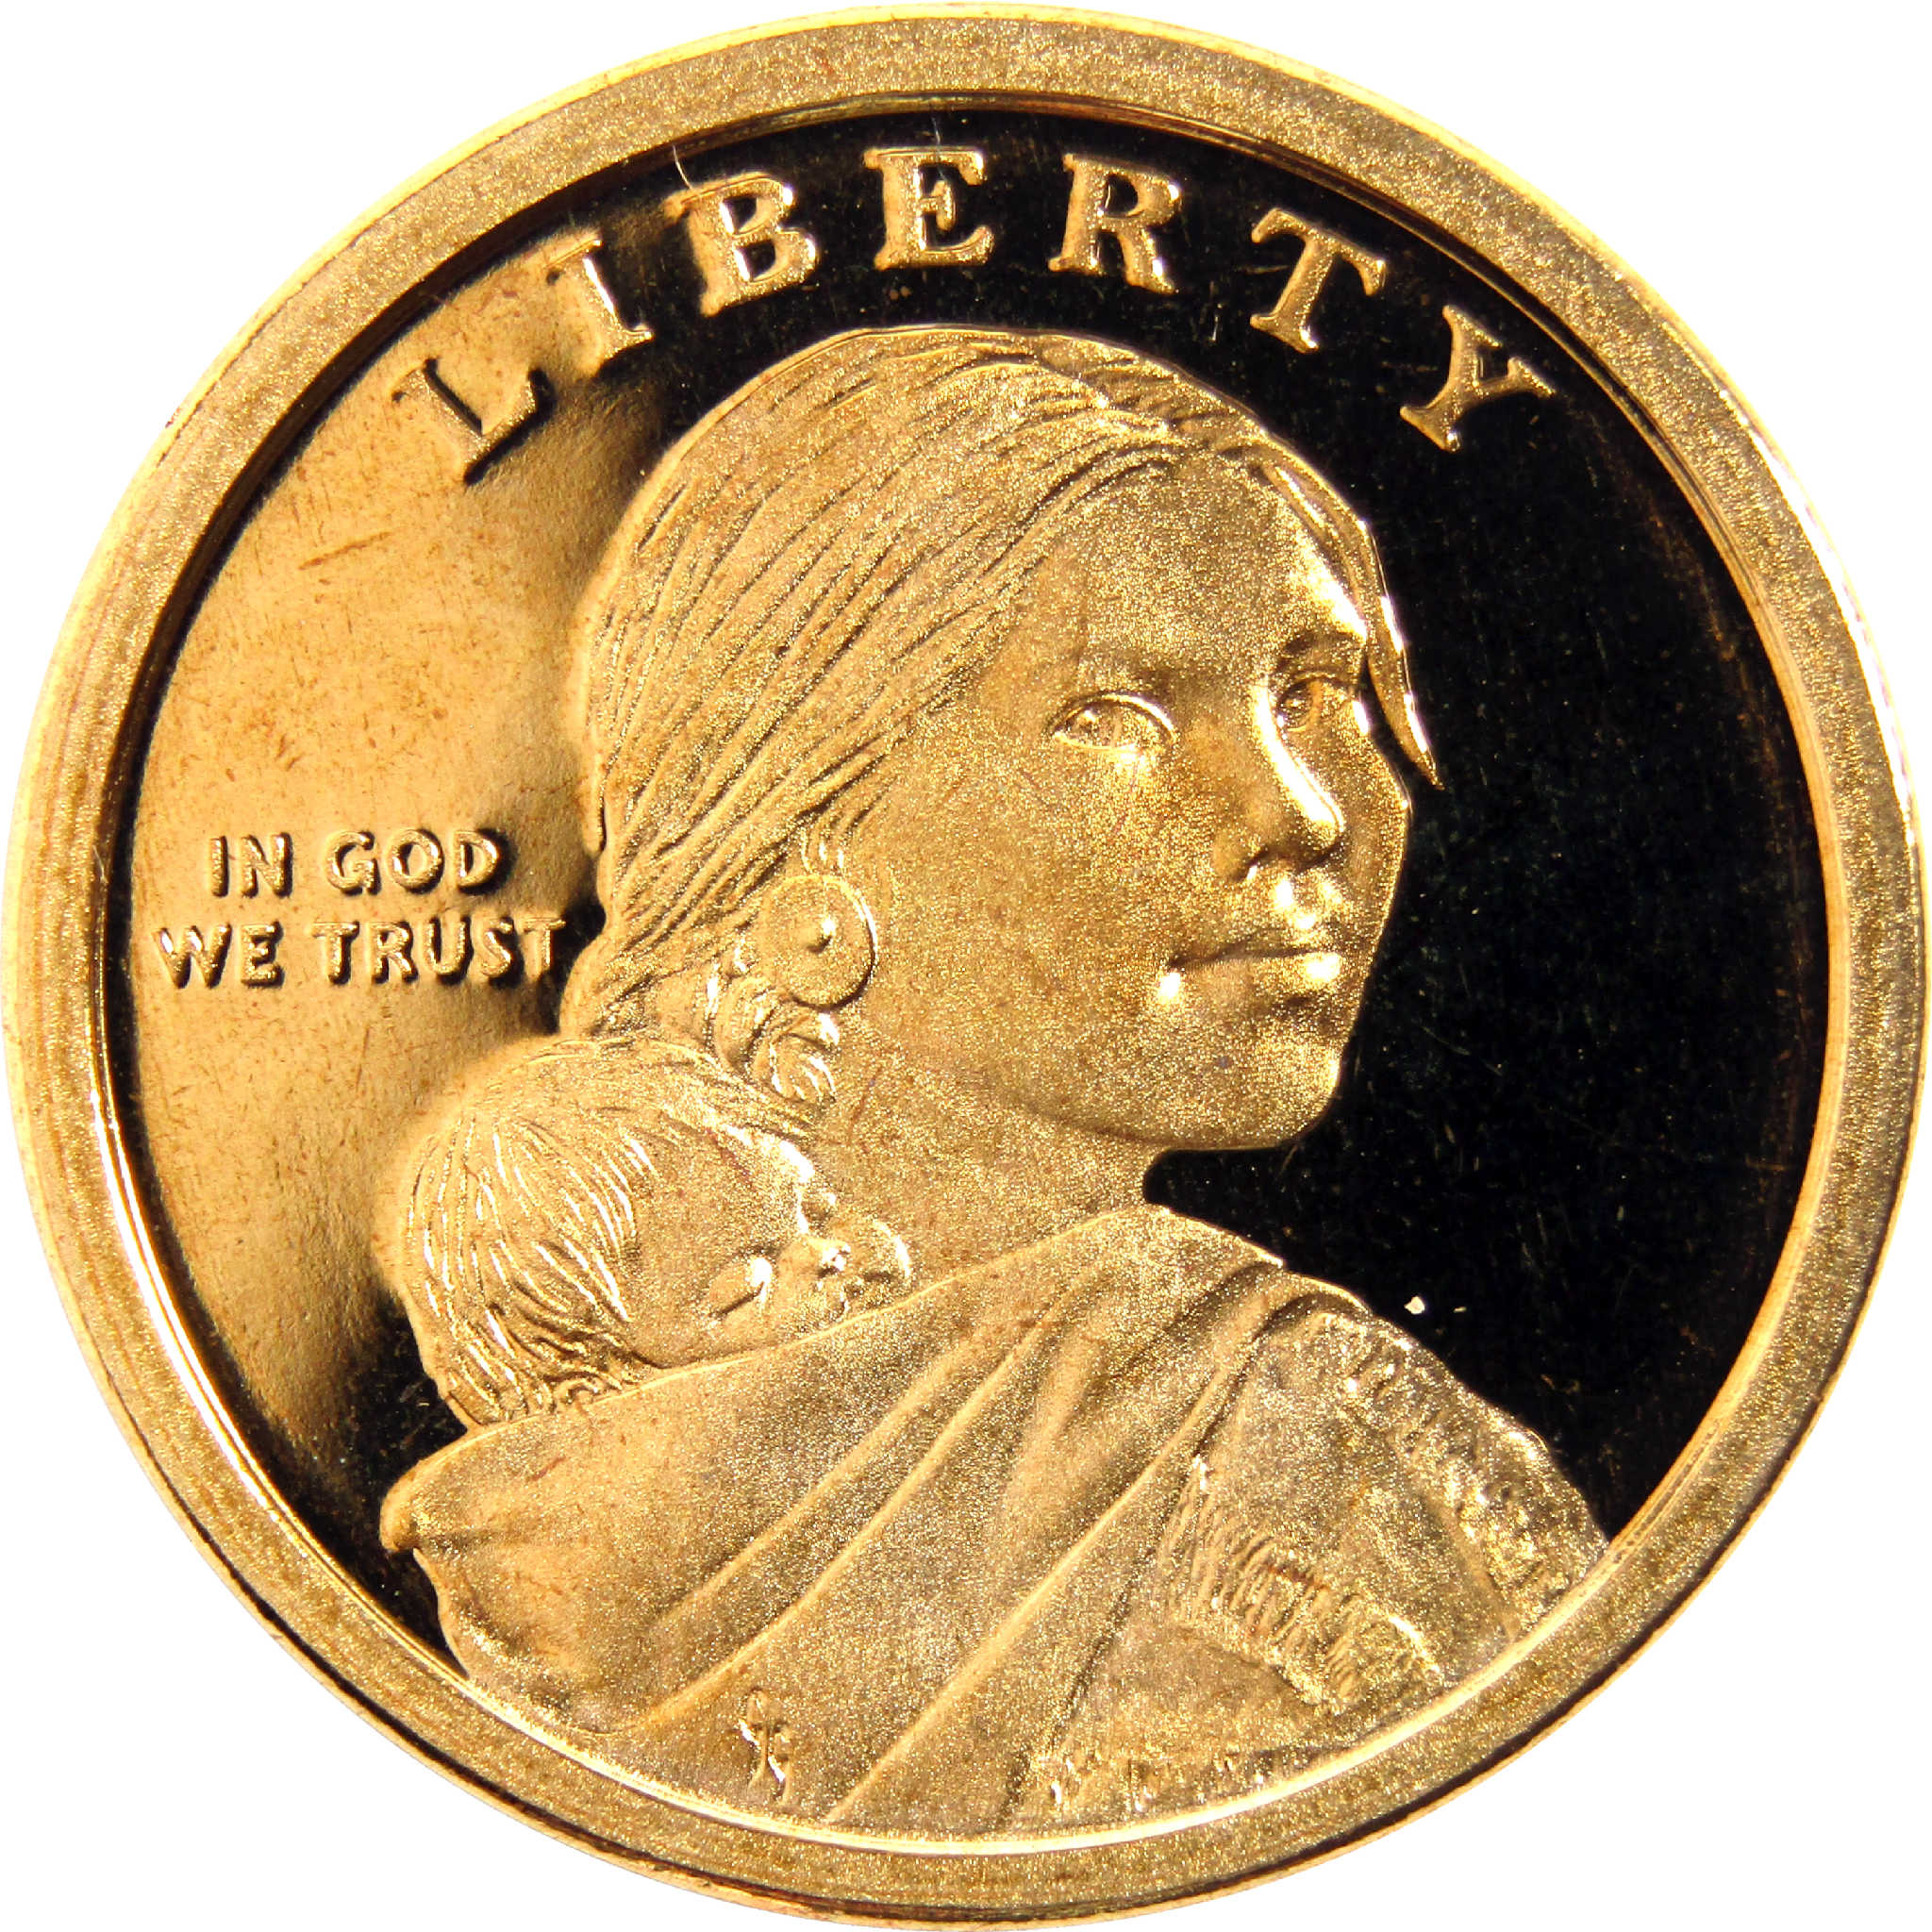 2011 S Wampanoag Treaty Native American Dollar Choice Proof $1 Coin